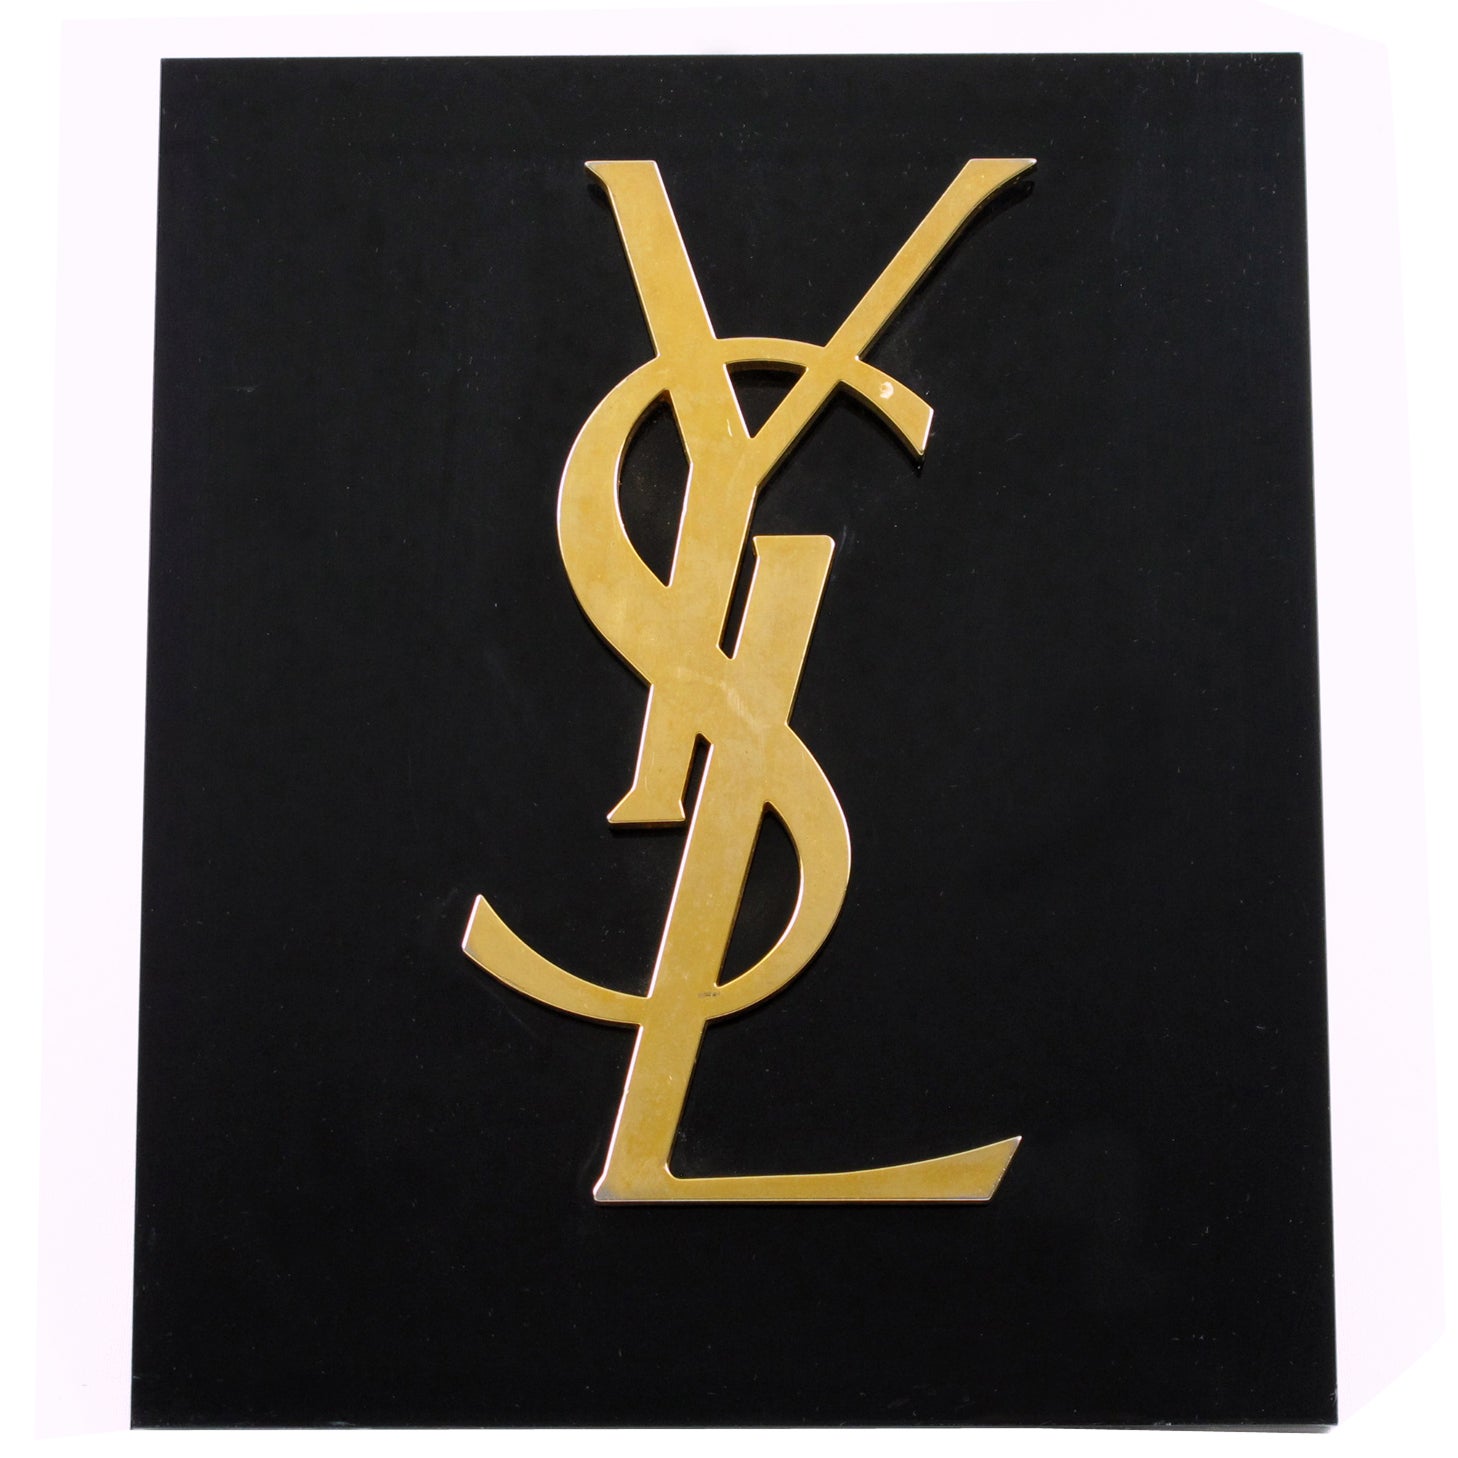 Ysl Sign - For Sale on 1stDibs | ysl pin, yves saint laurent sign 